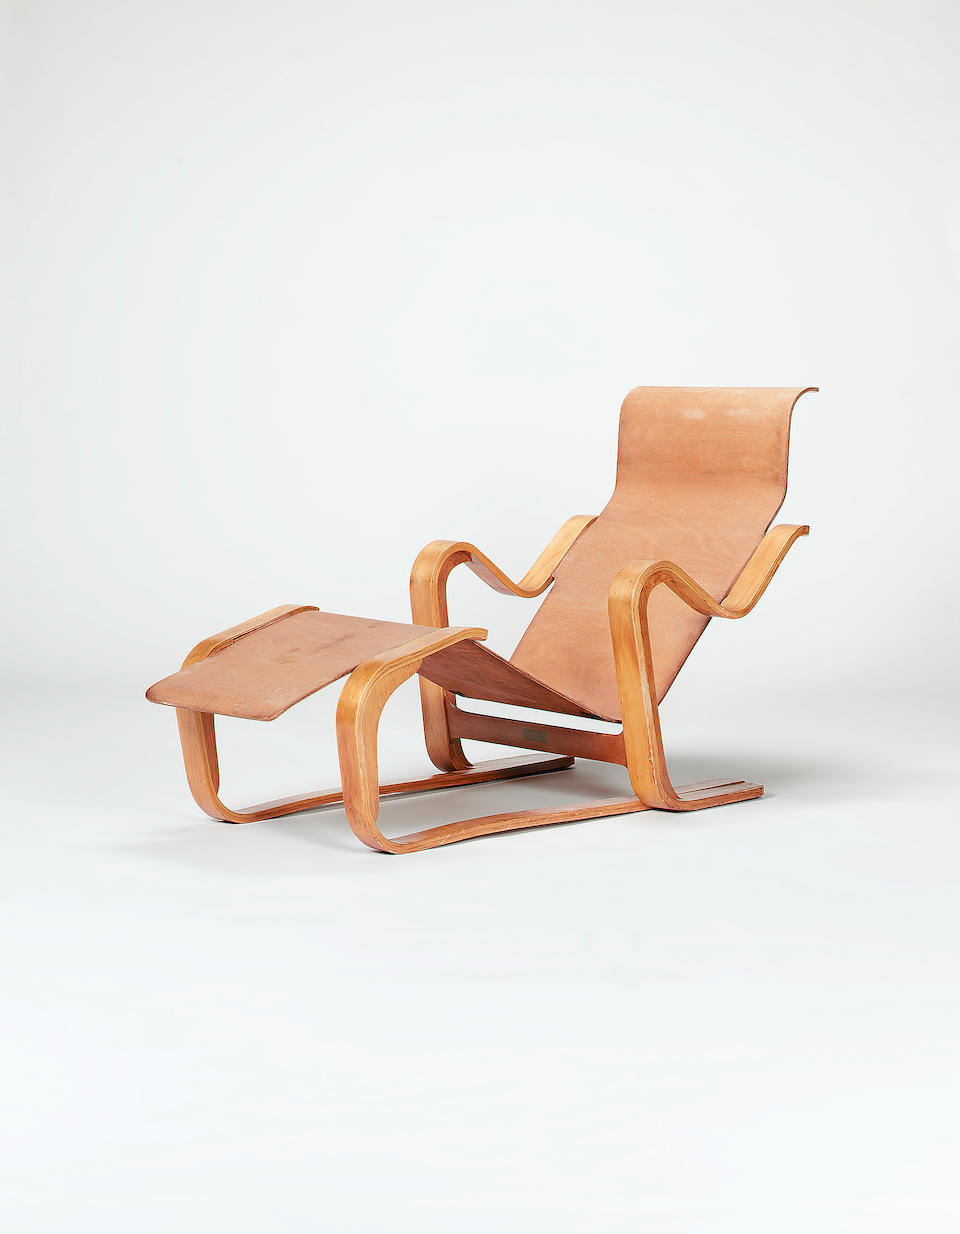 Marcel Breuer's Short Chair 